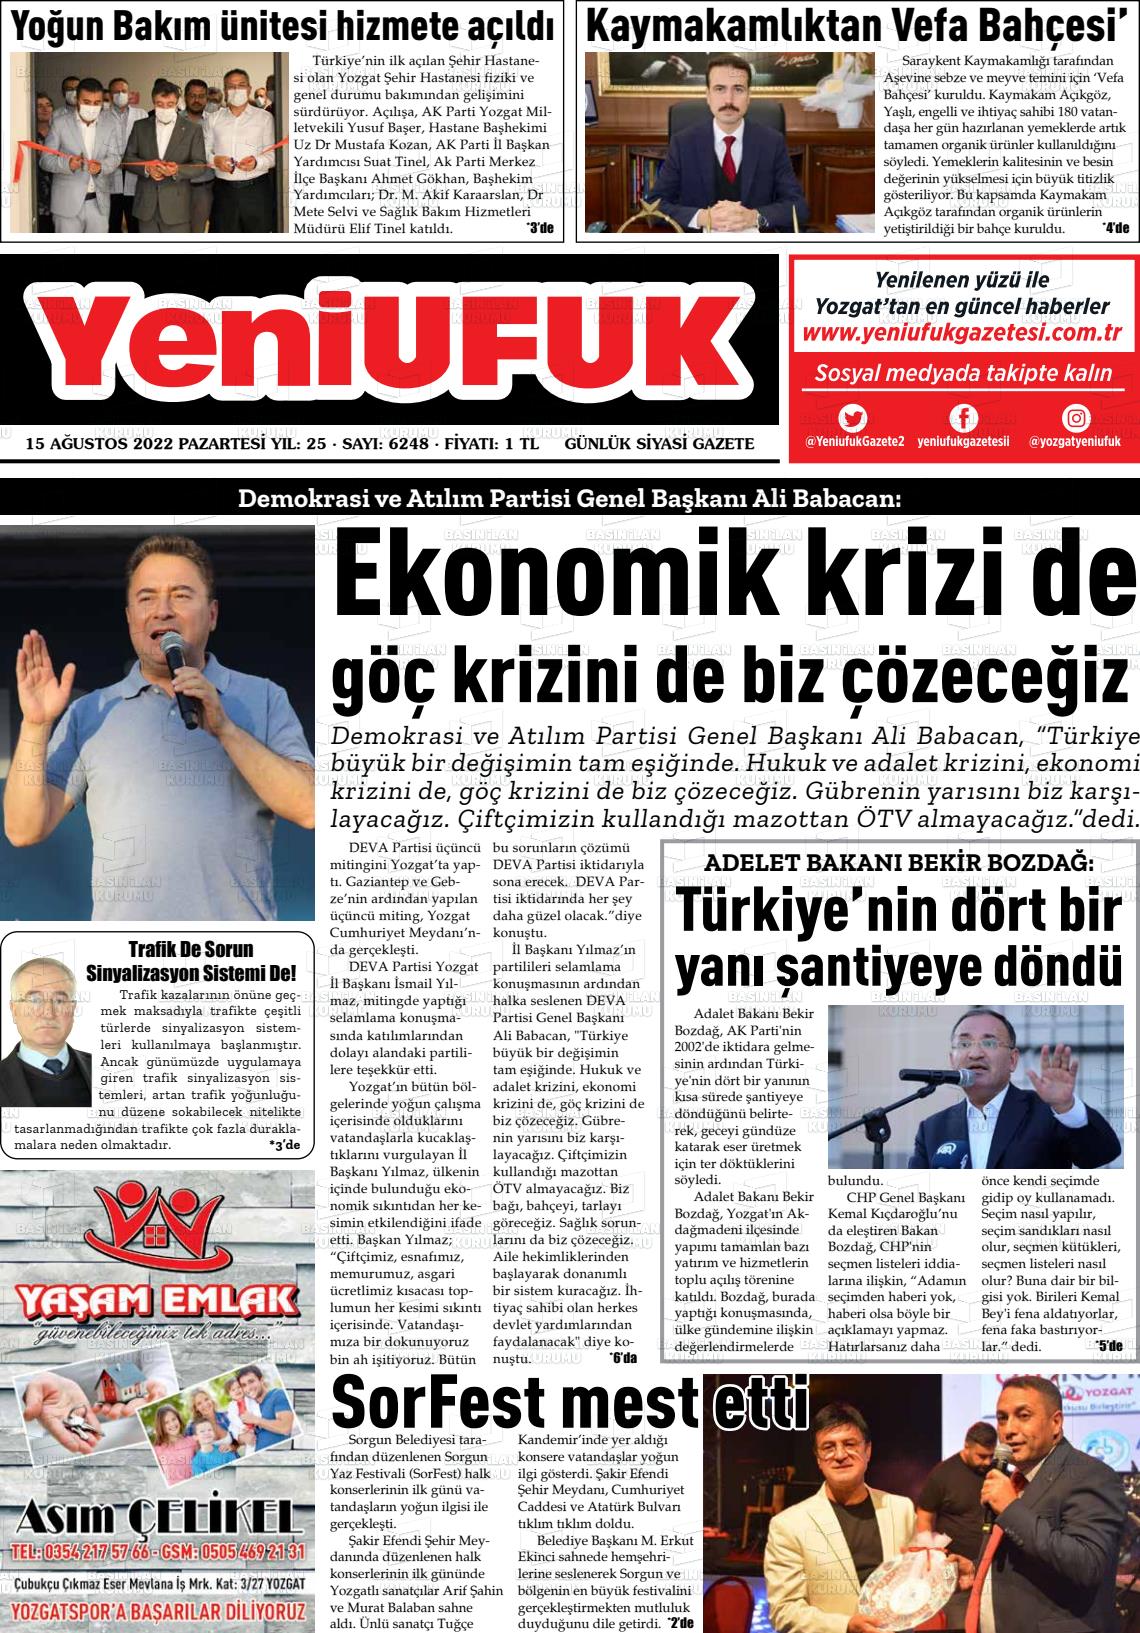 15 Ağustos 2022 Yozgat Yeni Ufuk Gazete Manşeti